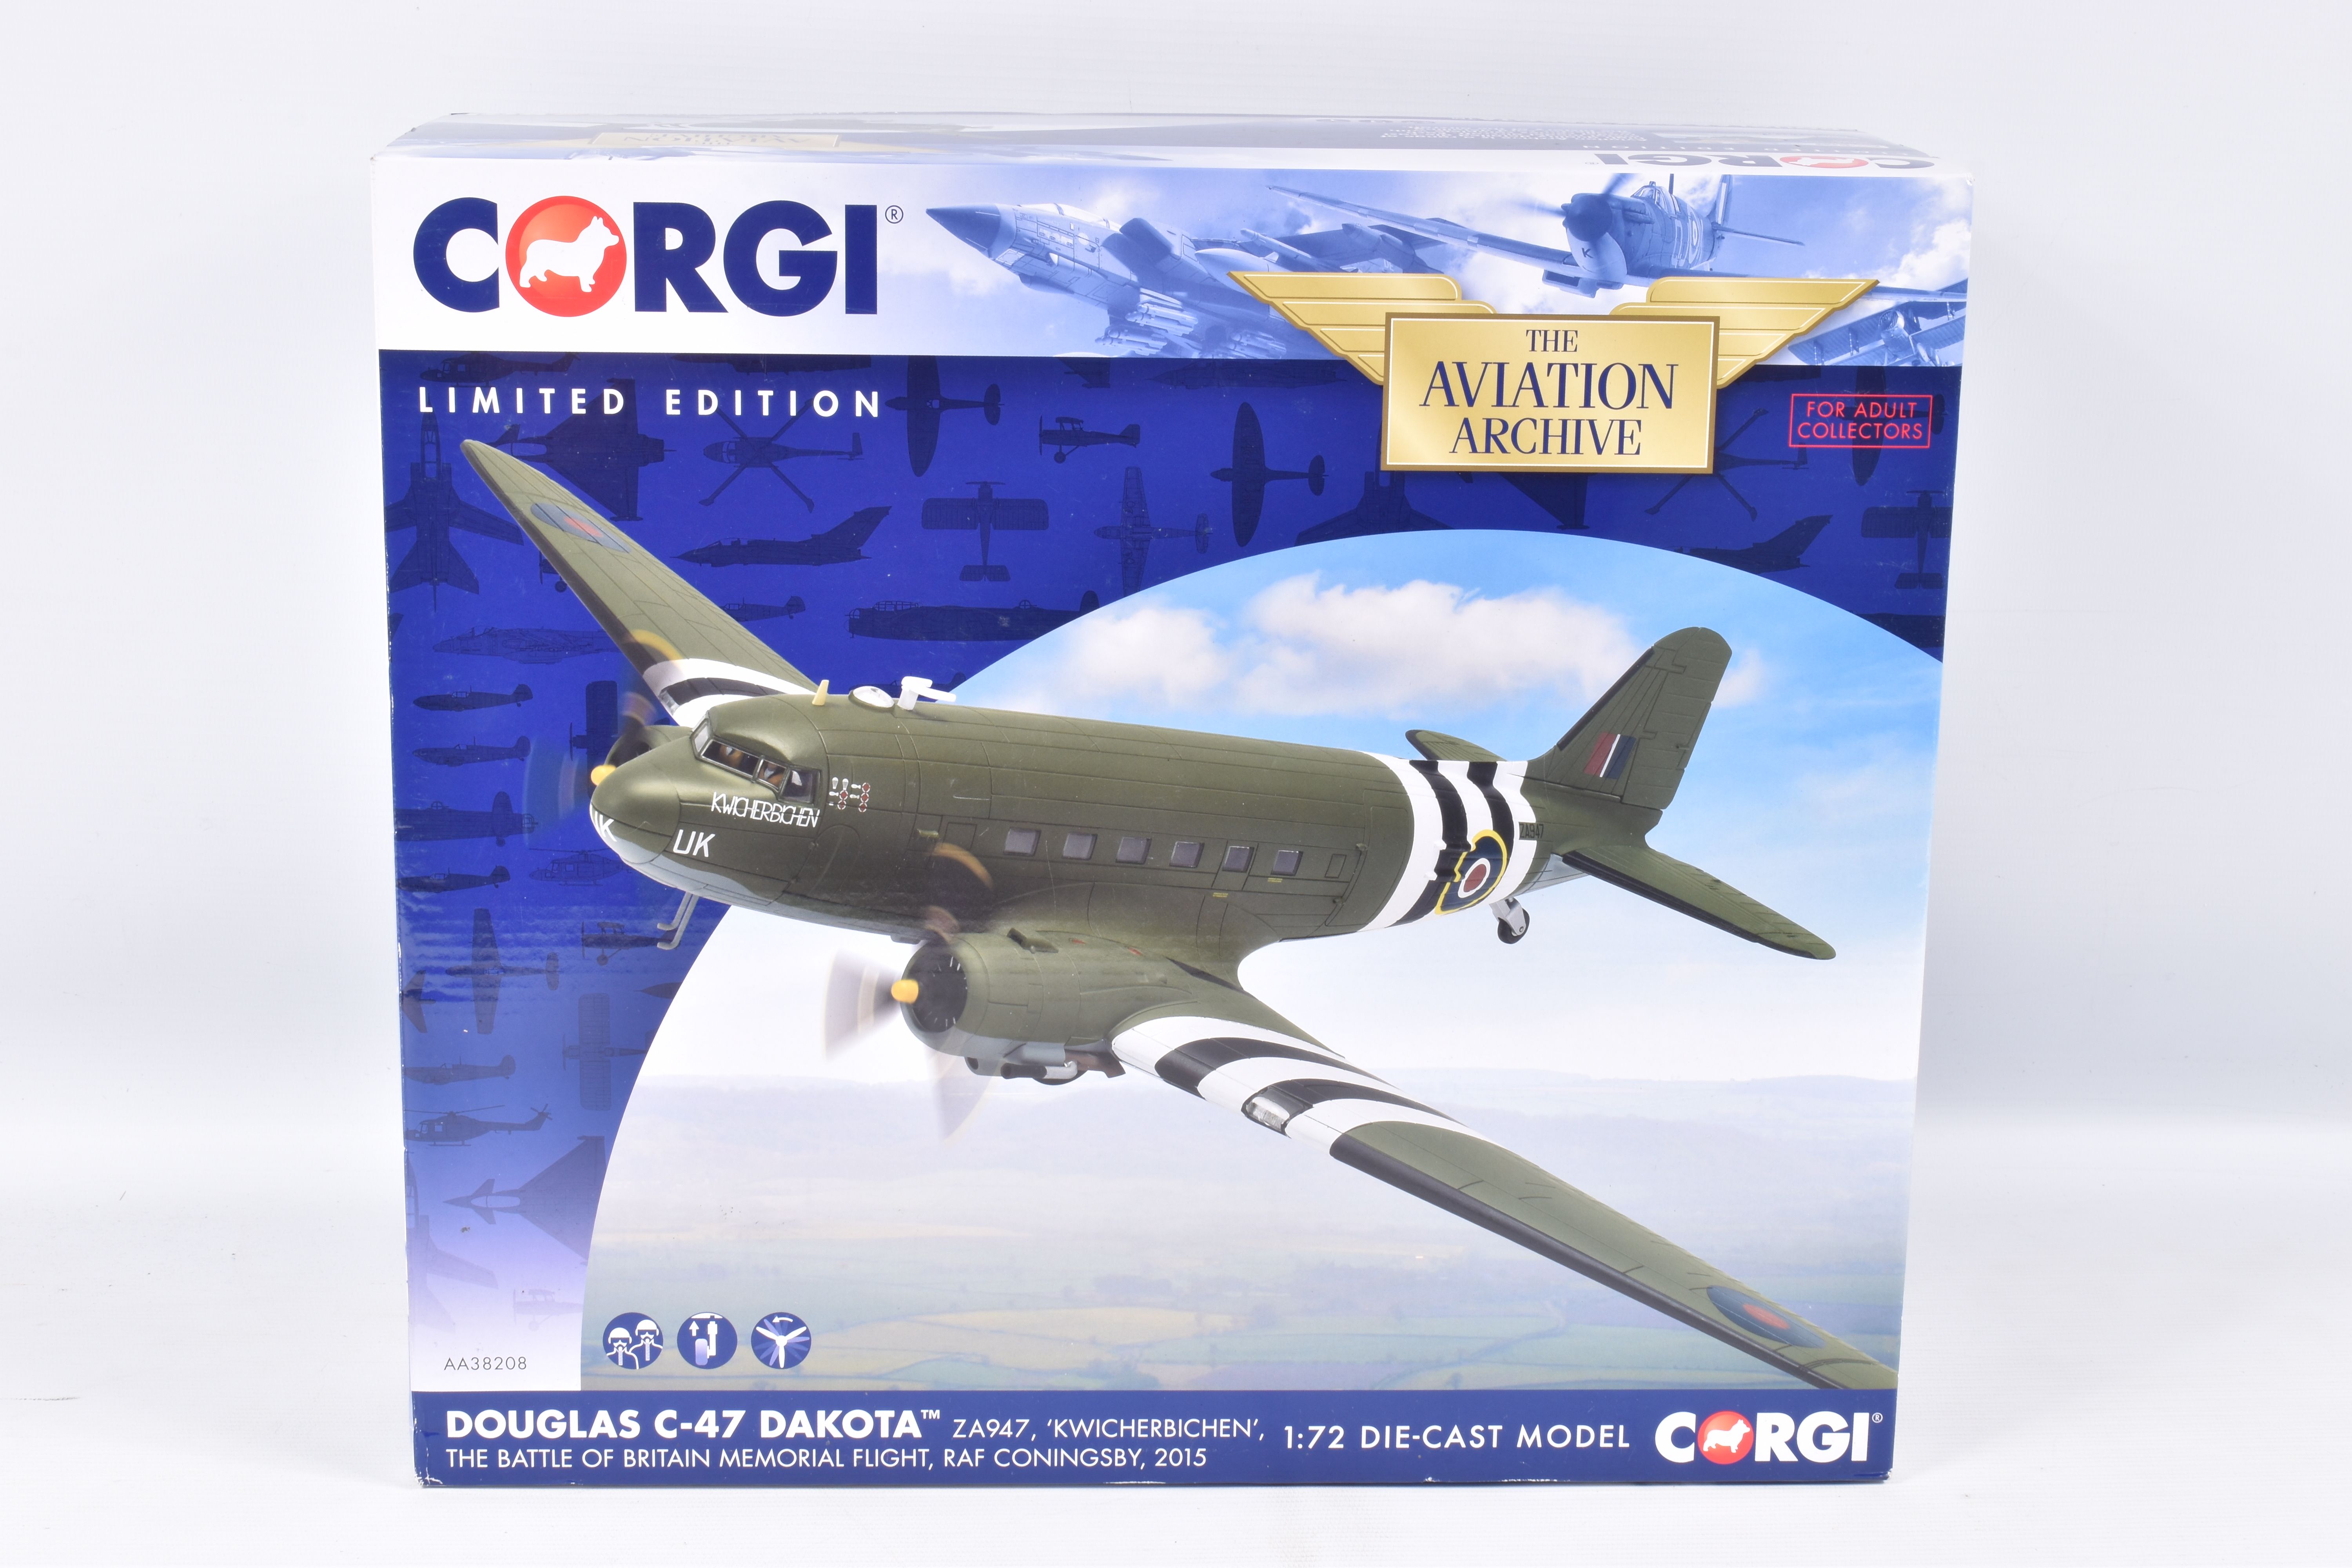 A BOXED LIMITED EDITION 1:72 SCALE CORGI AVIATION ARCHIVE DOUGLAS C-47 DAKOTA DIECAST MODEL